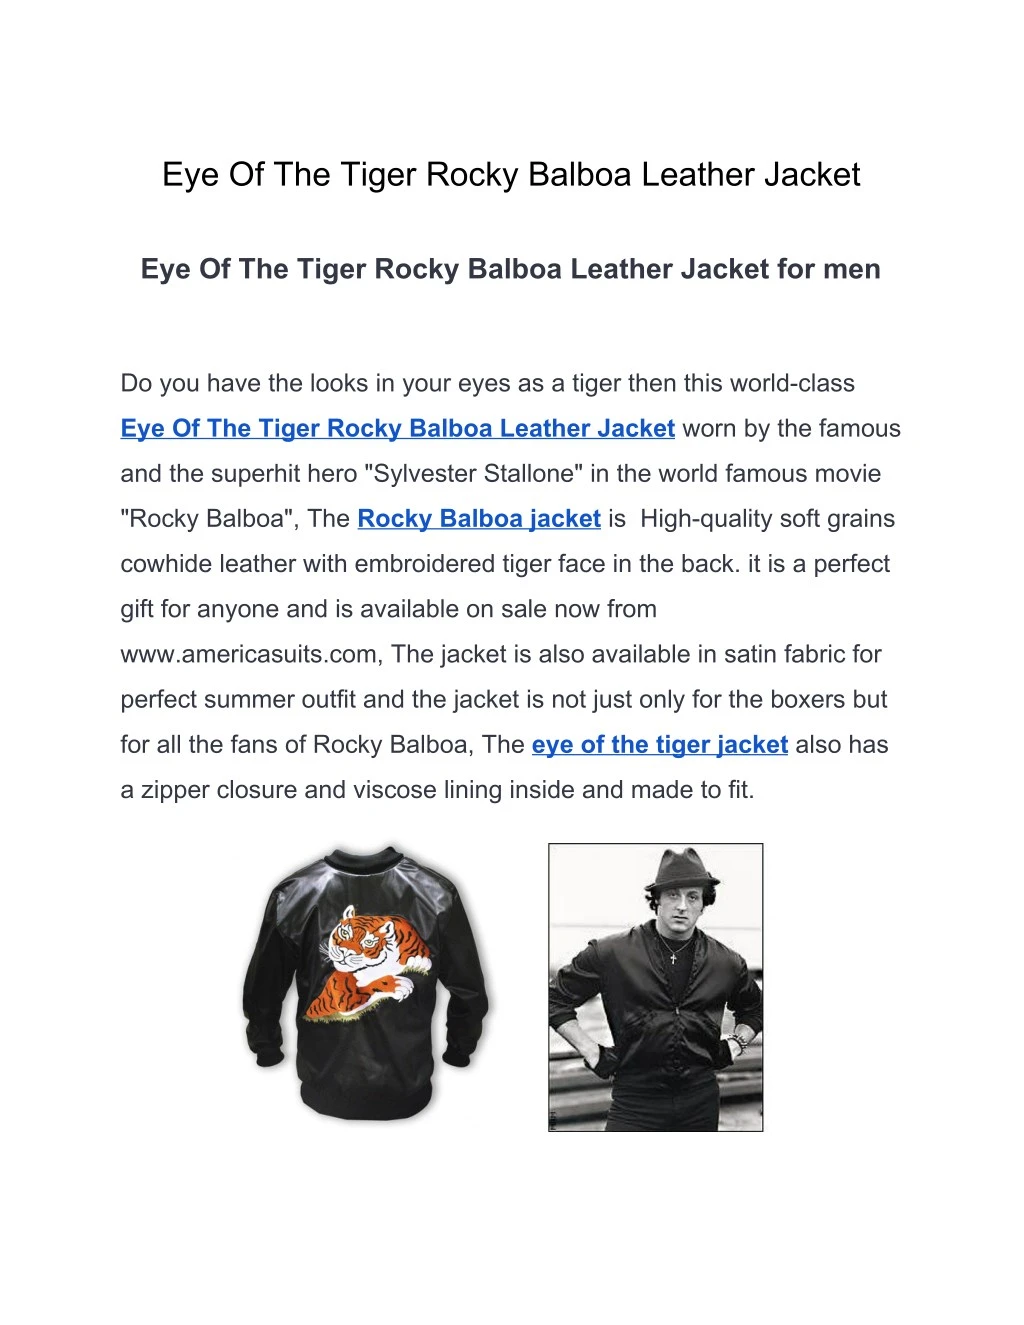 eye of the tiger rocky balboa leather jacket